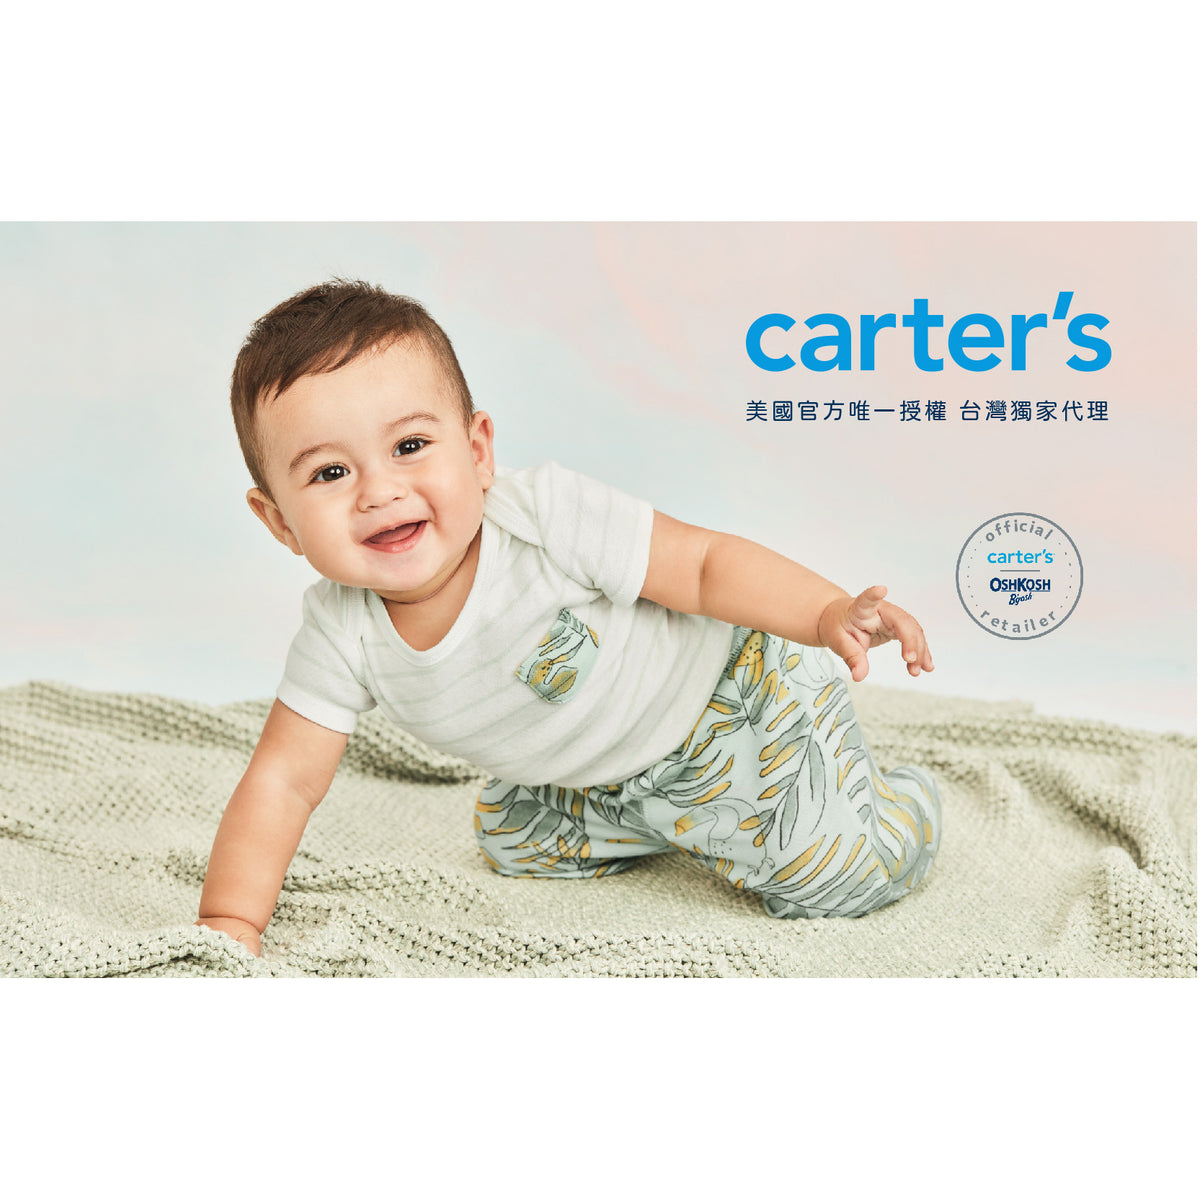 Carter's 藍色兄弟包屁衣(6M-24M)